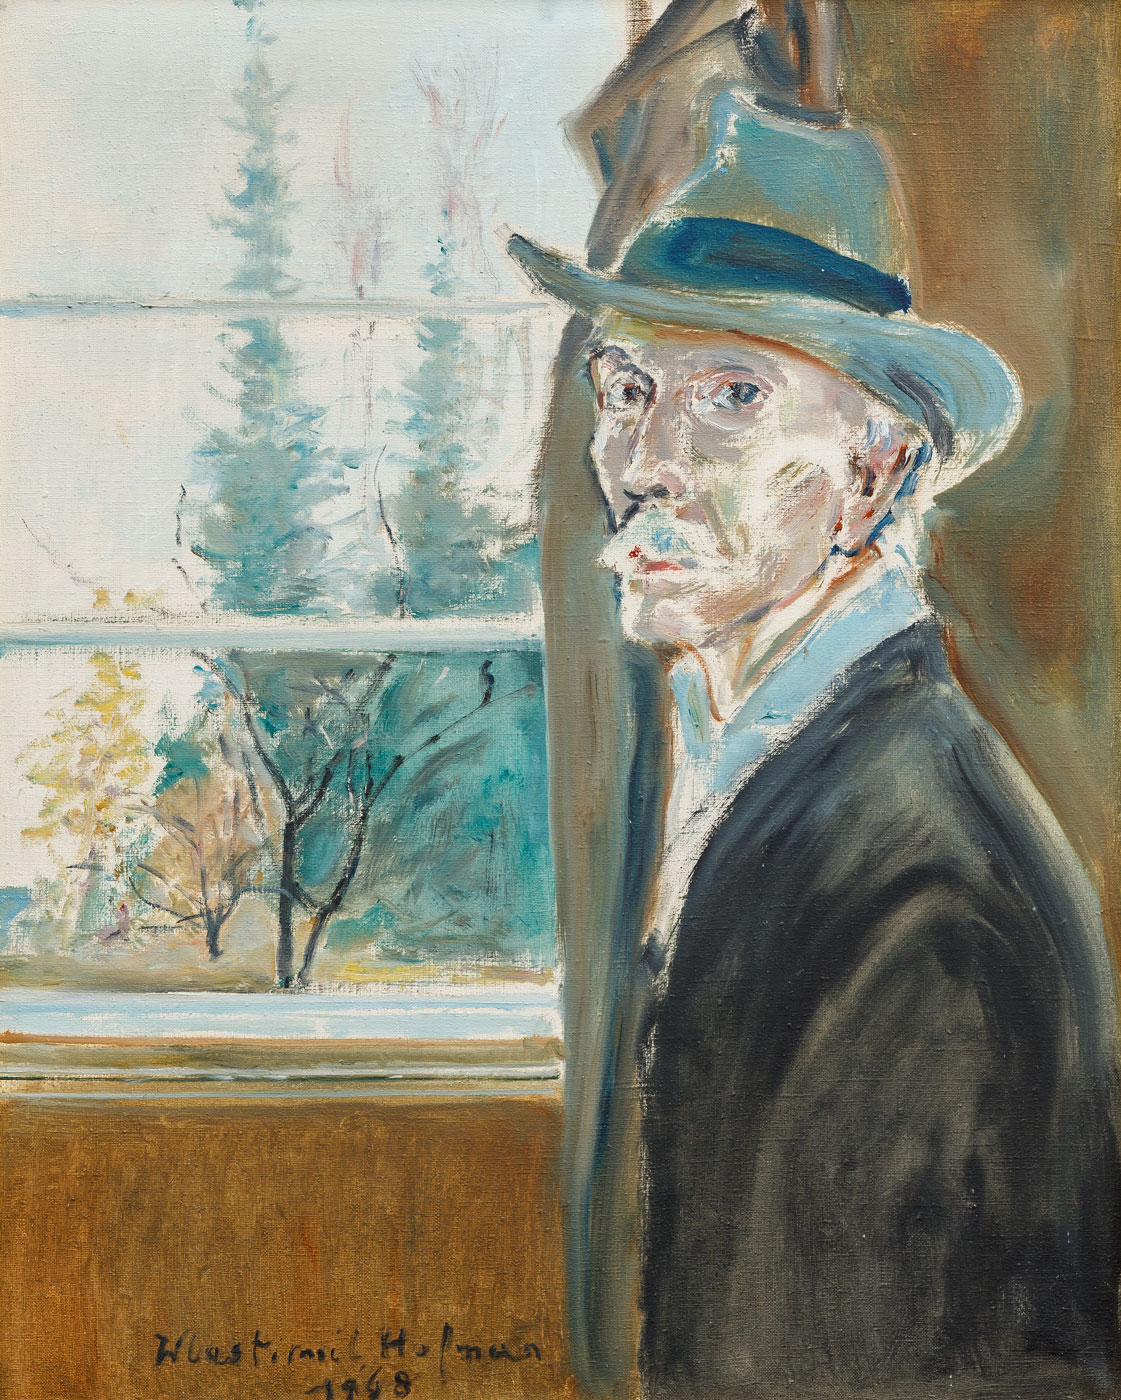 Wlastimil Hofman (1881-1970) "Autoportret", źródło: Galerie Kodl